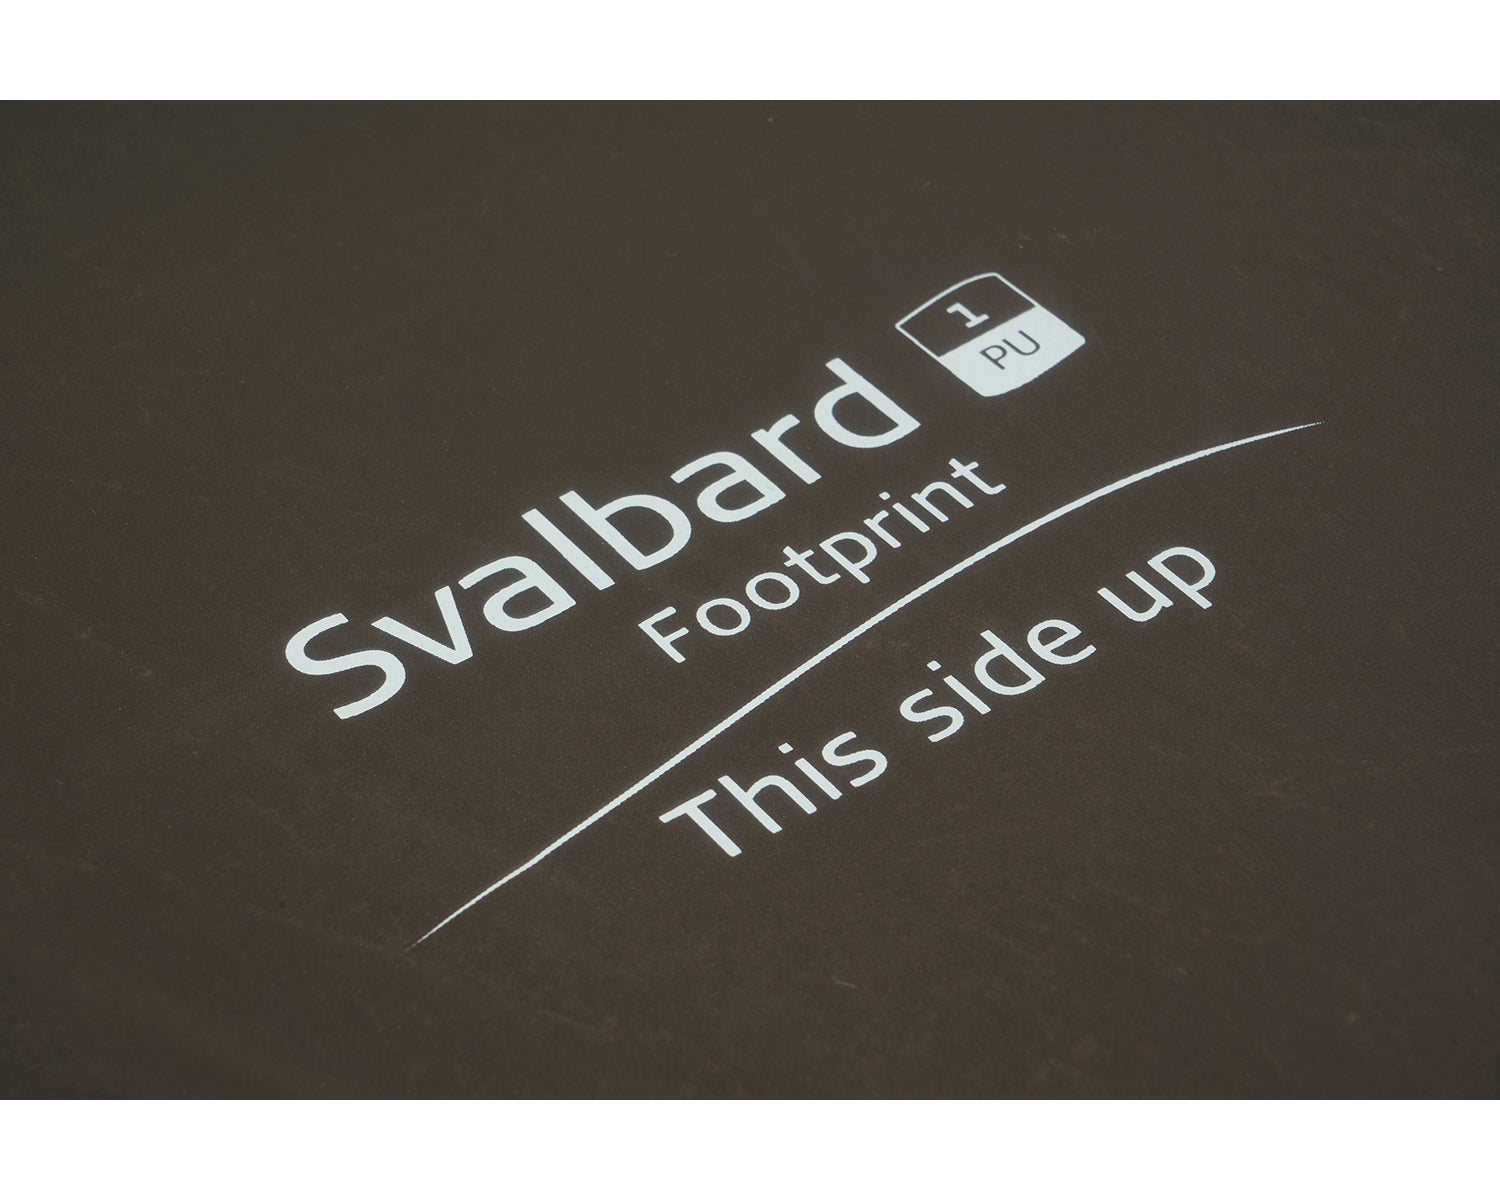 Svalbard 1 PU (2.0) footprint - Black